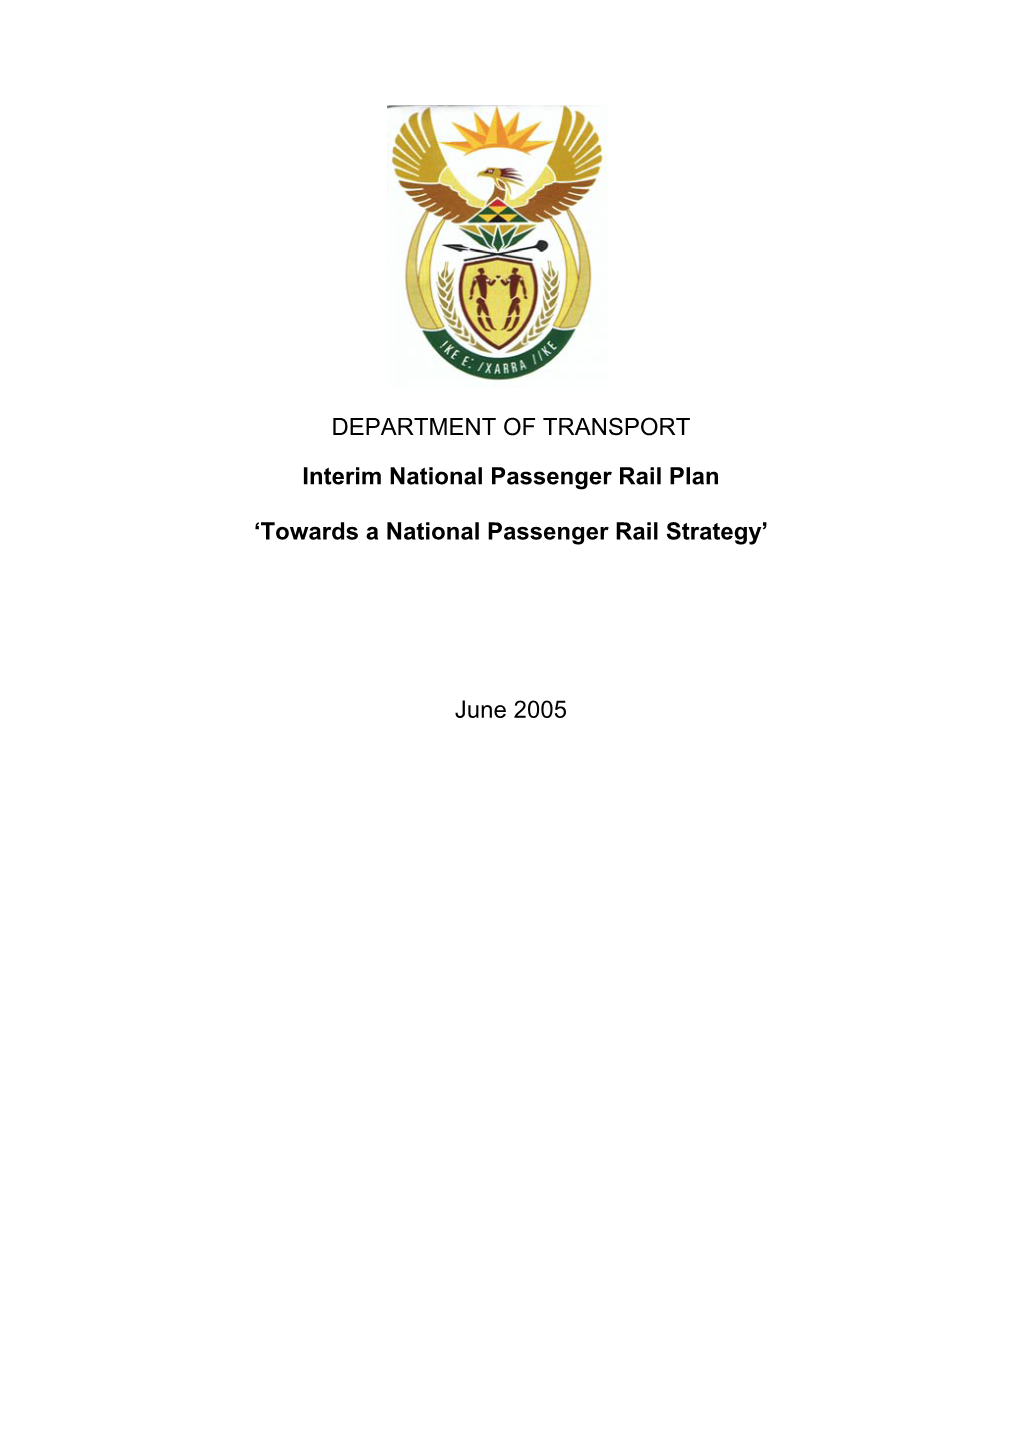 Department of Transport Interim National Passenger Rail Plan Phase 1 Report